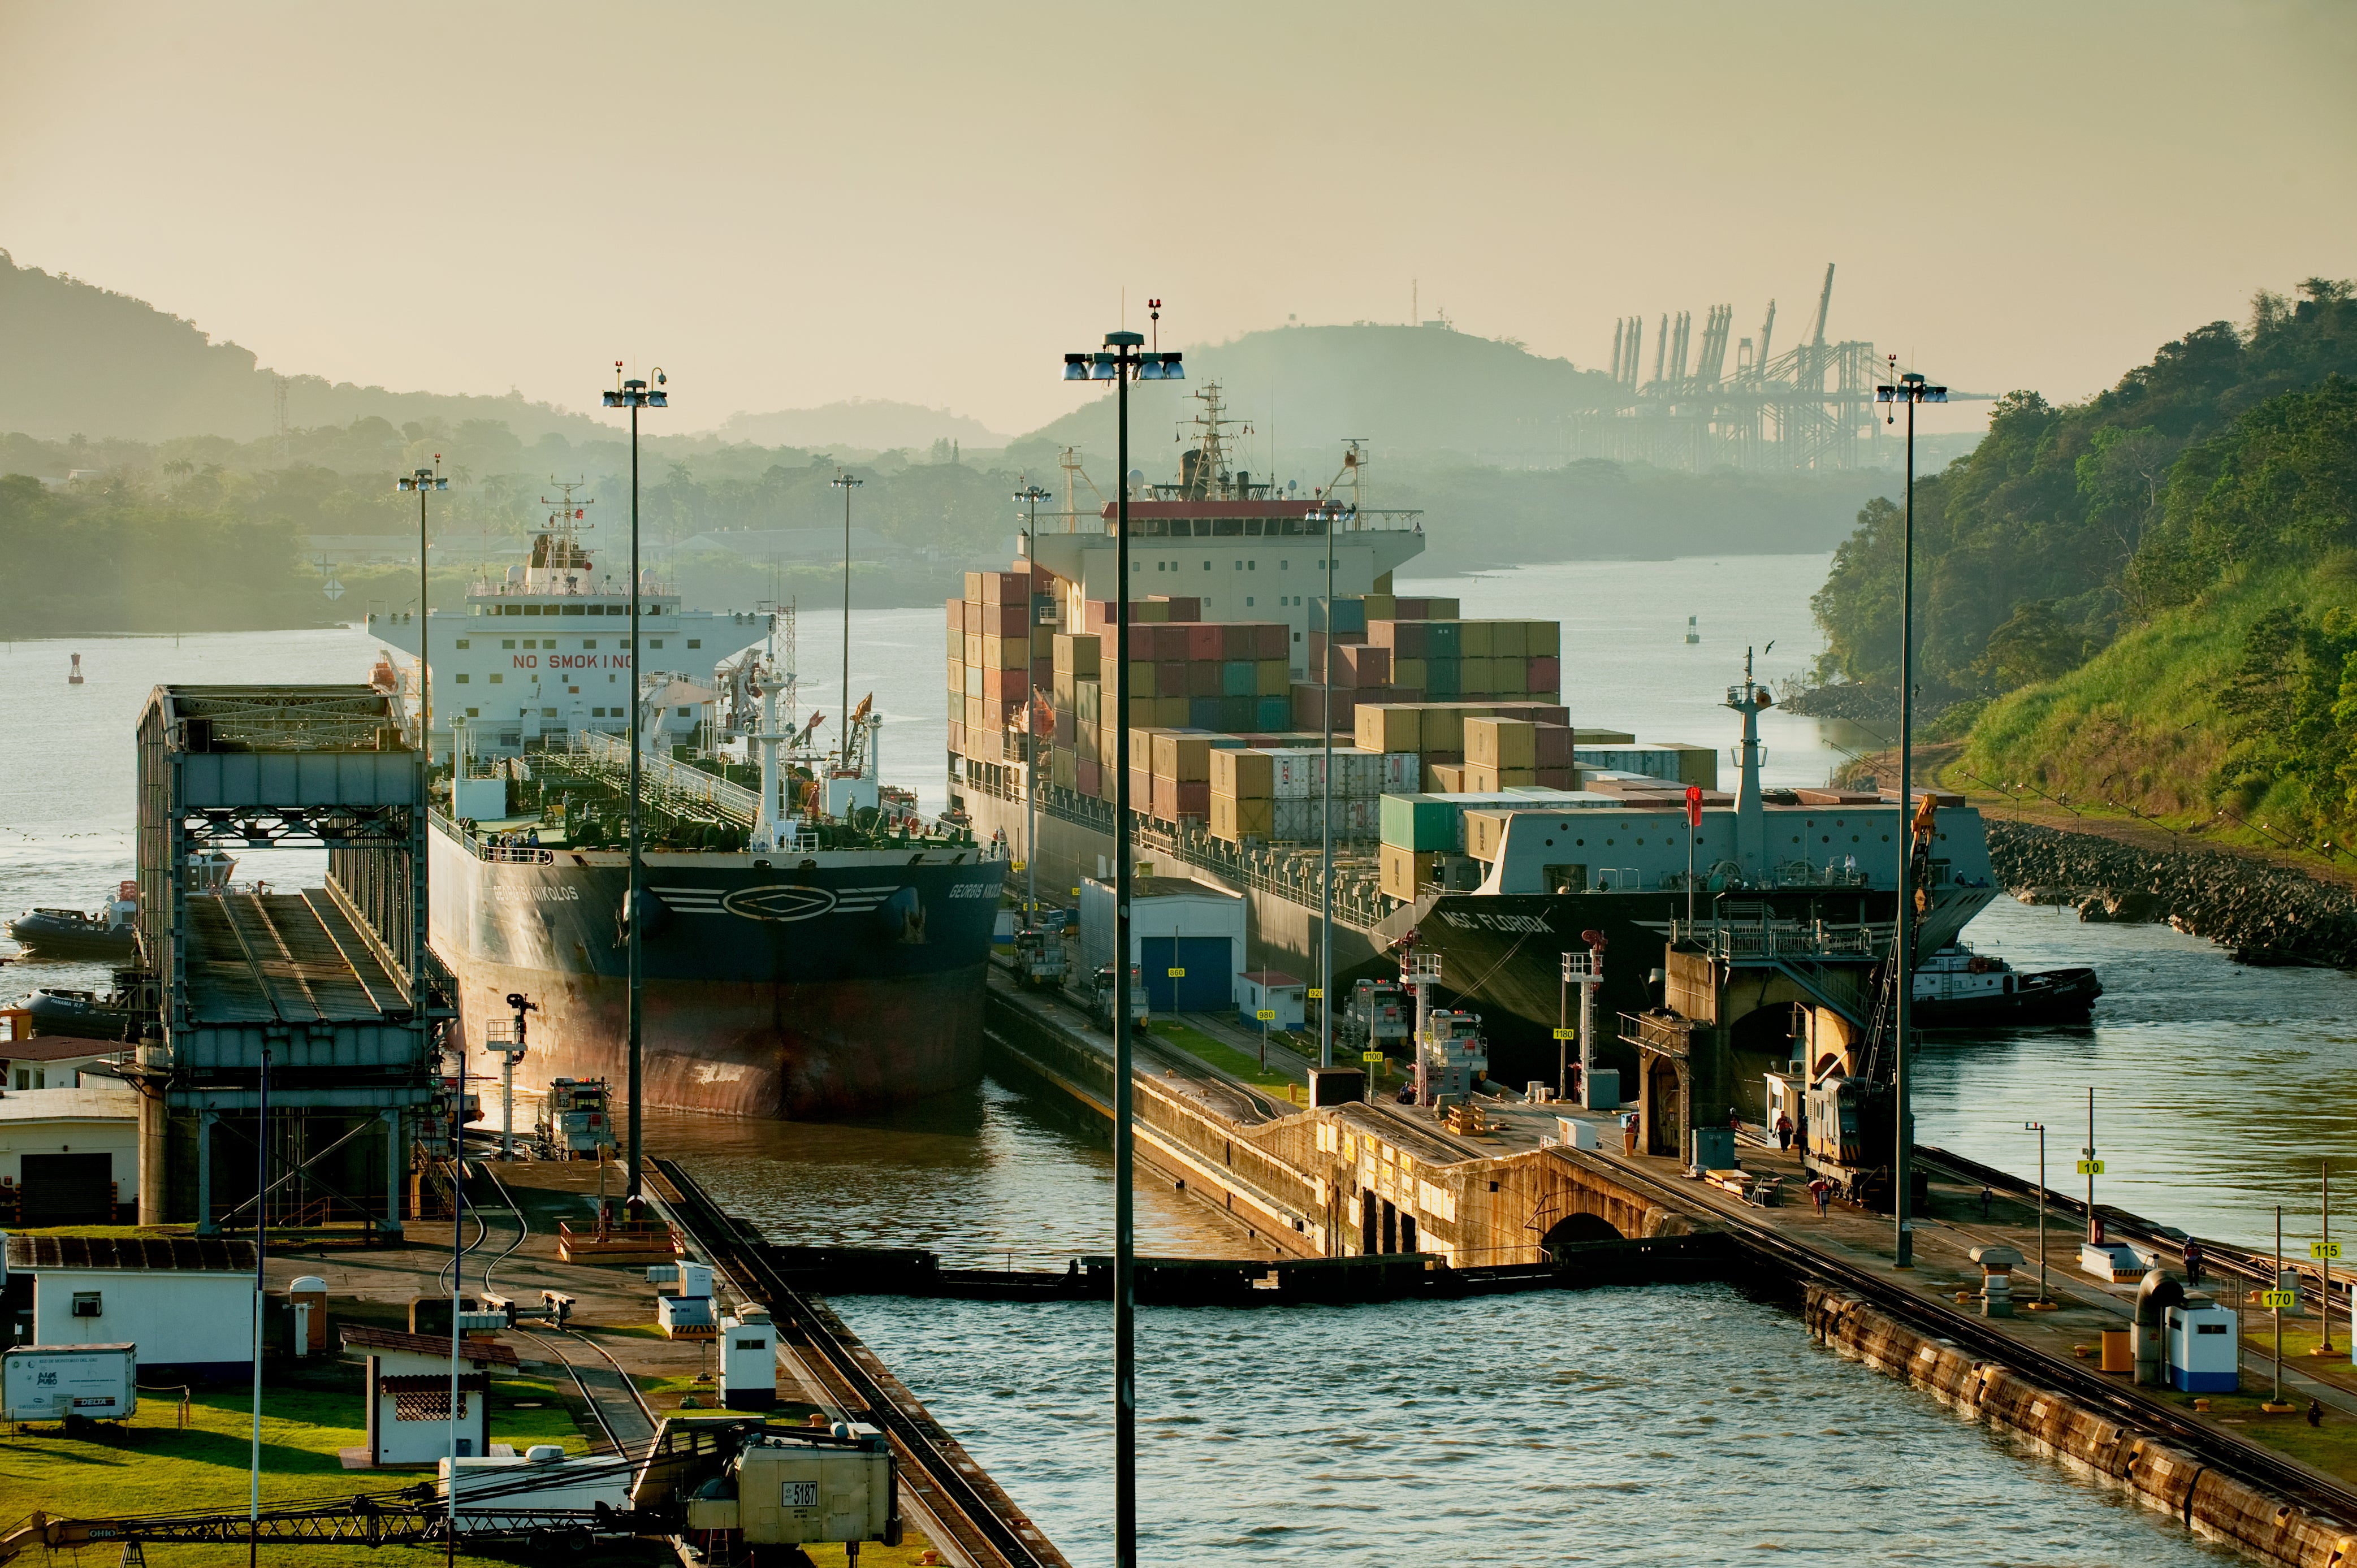 Panama Canal VIP Tour at Miraflores Locks